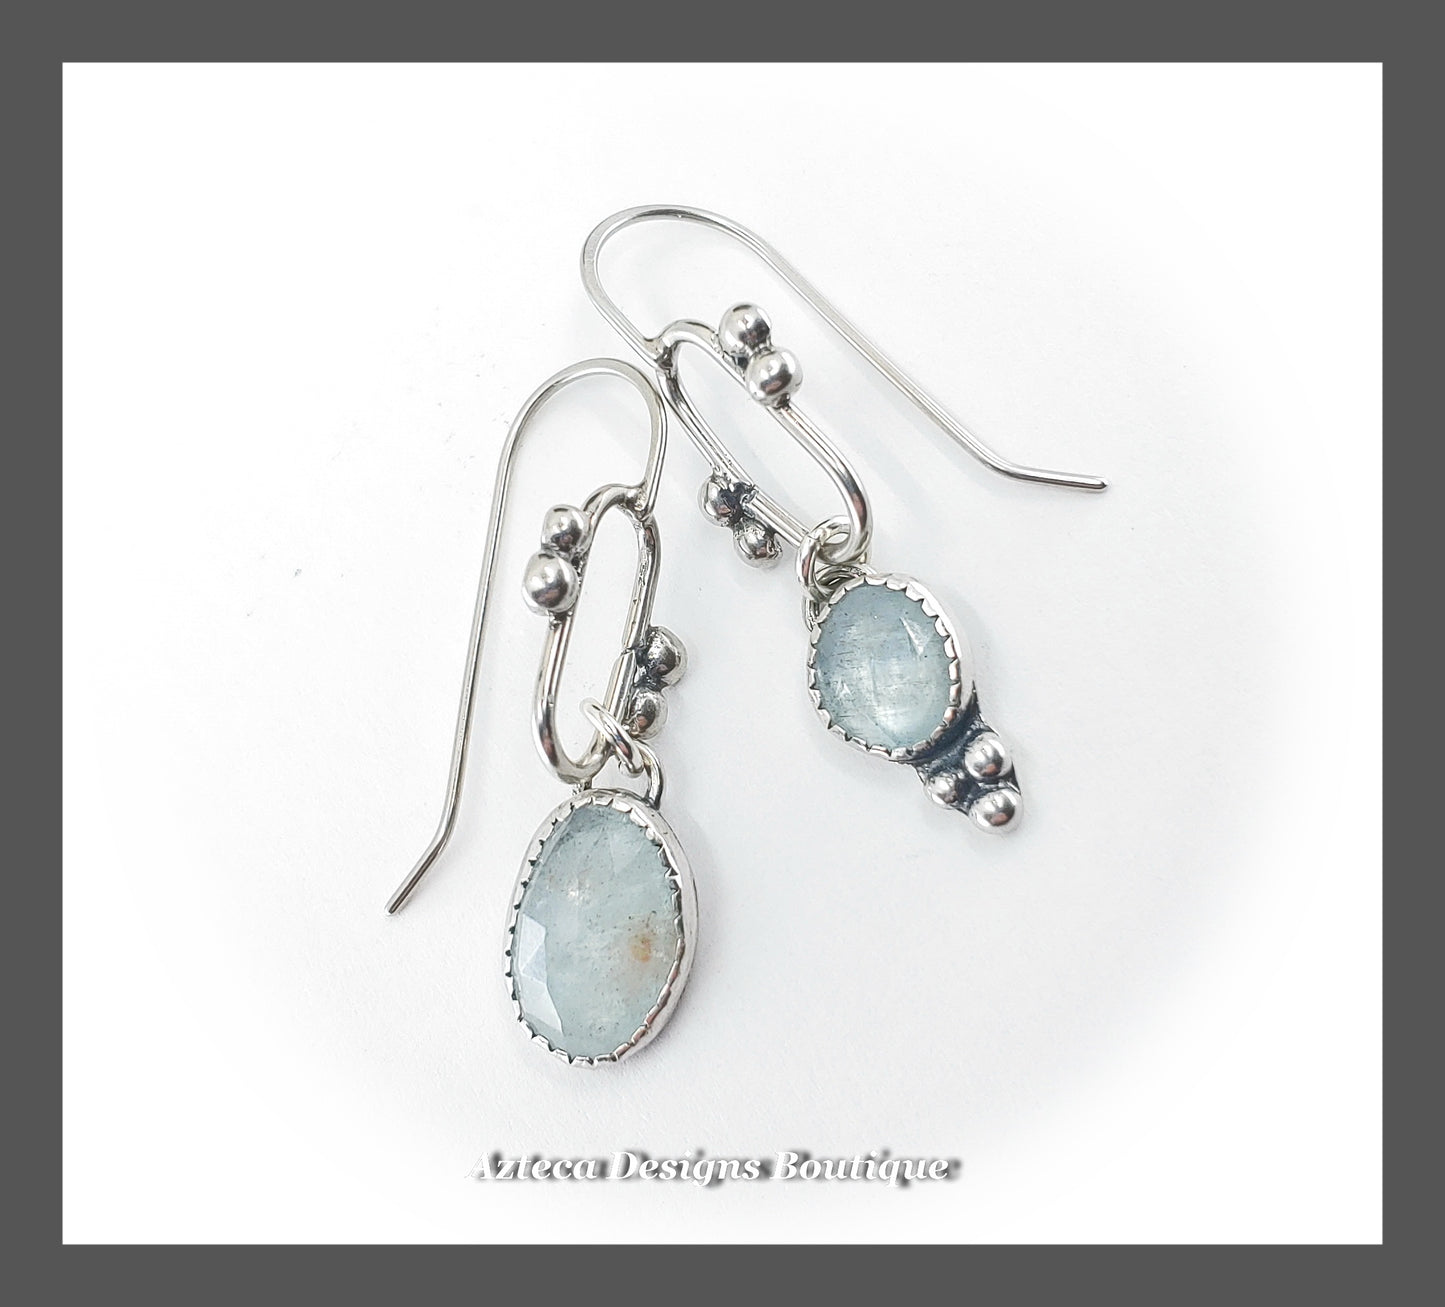 Aquamarine + Argentium Silver + Asymmetrical Hand Fabricated Earrings